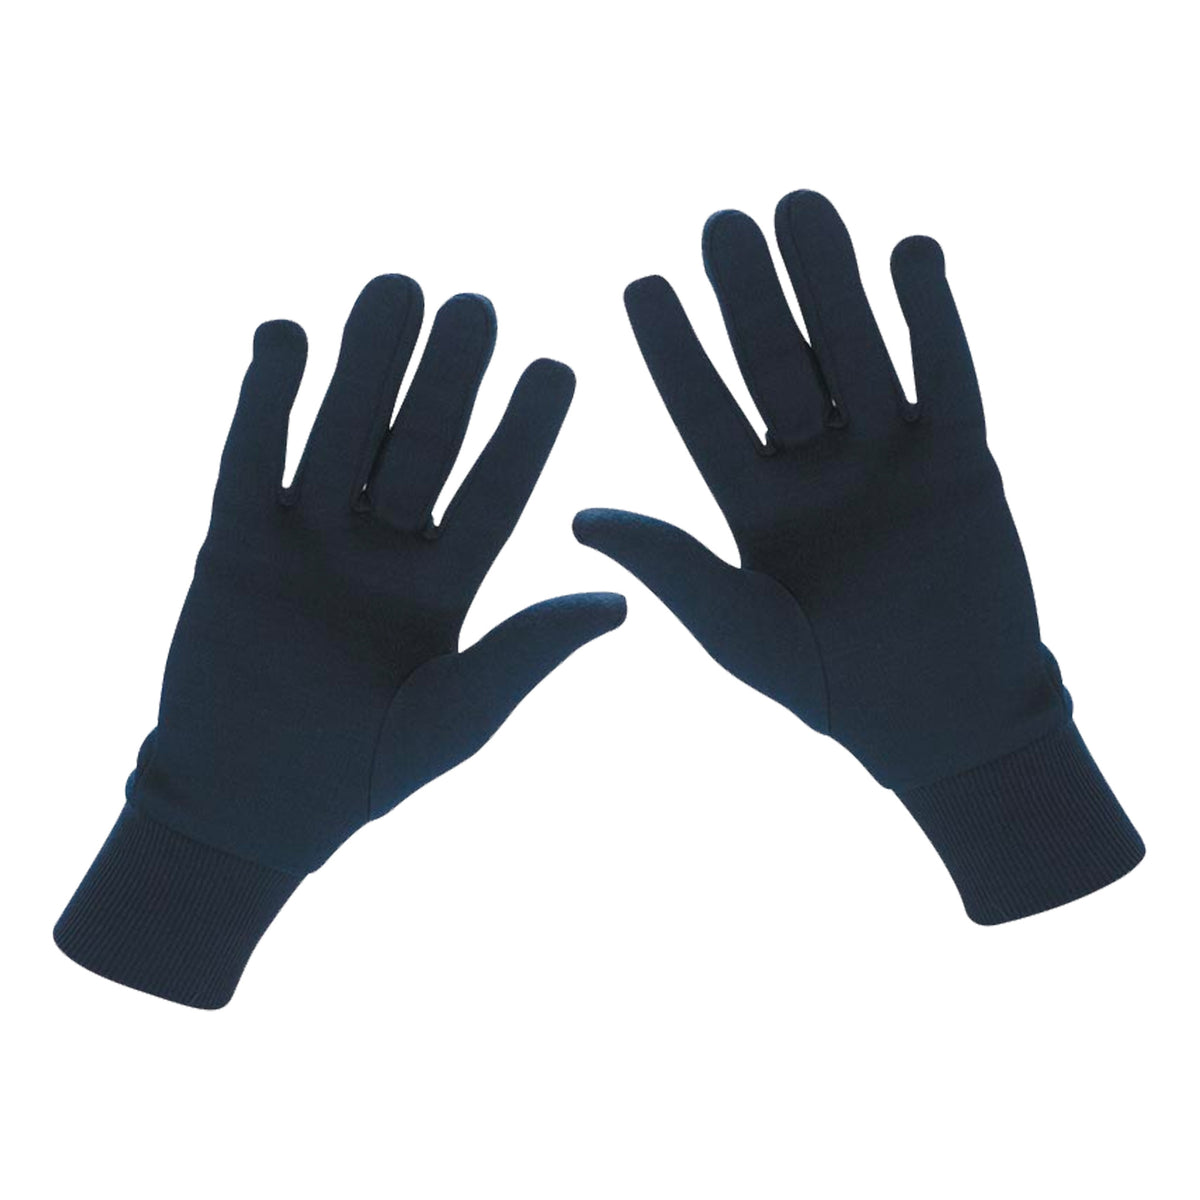 polypropylene glove